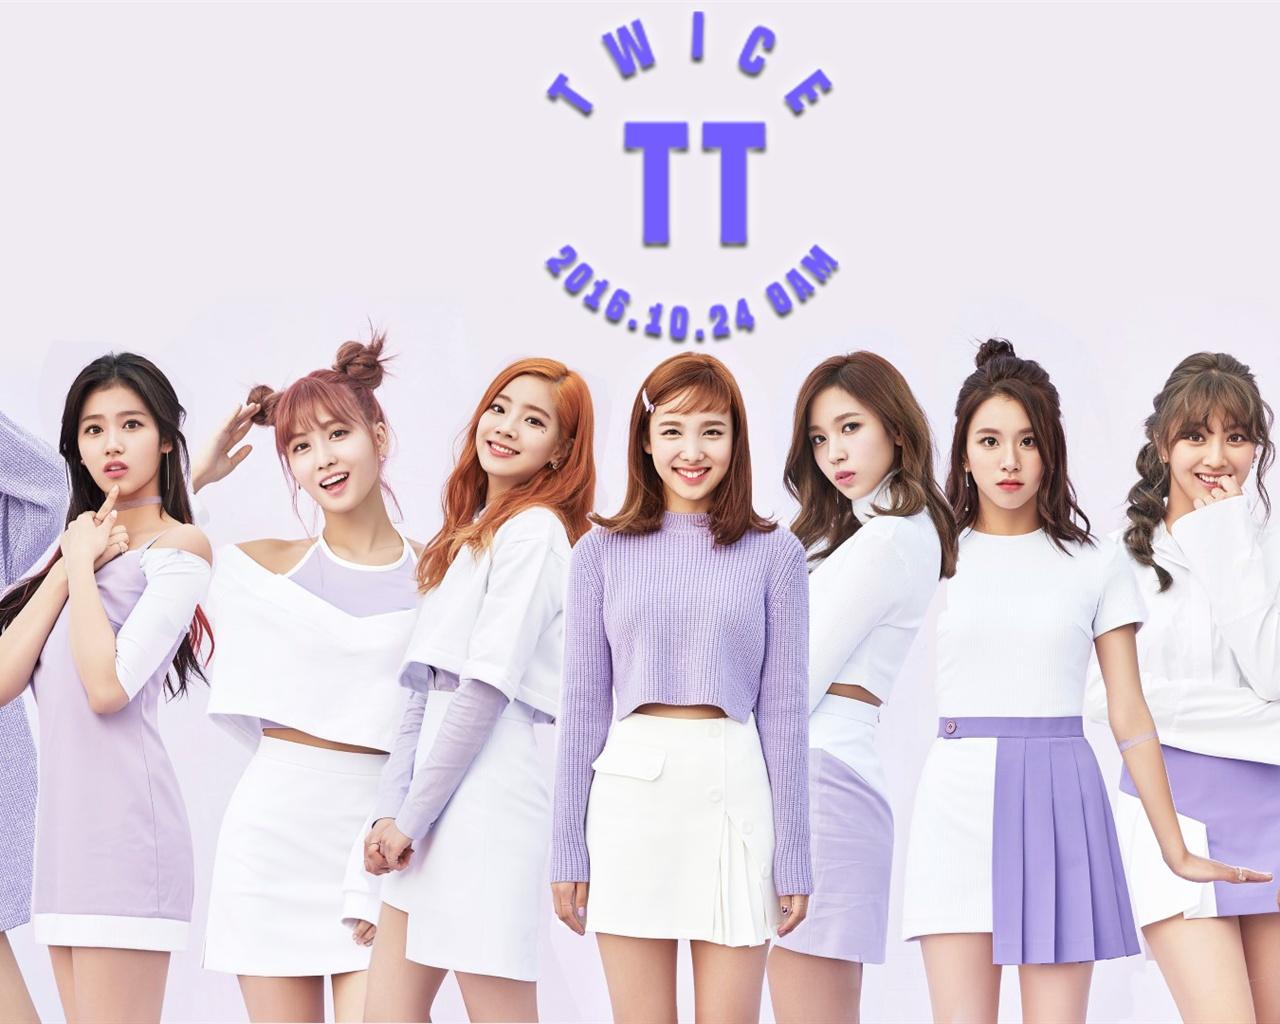 TWICE, Korean Music Girls 05 640x960 IPhone 4 4S Wallpaper